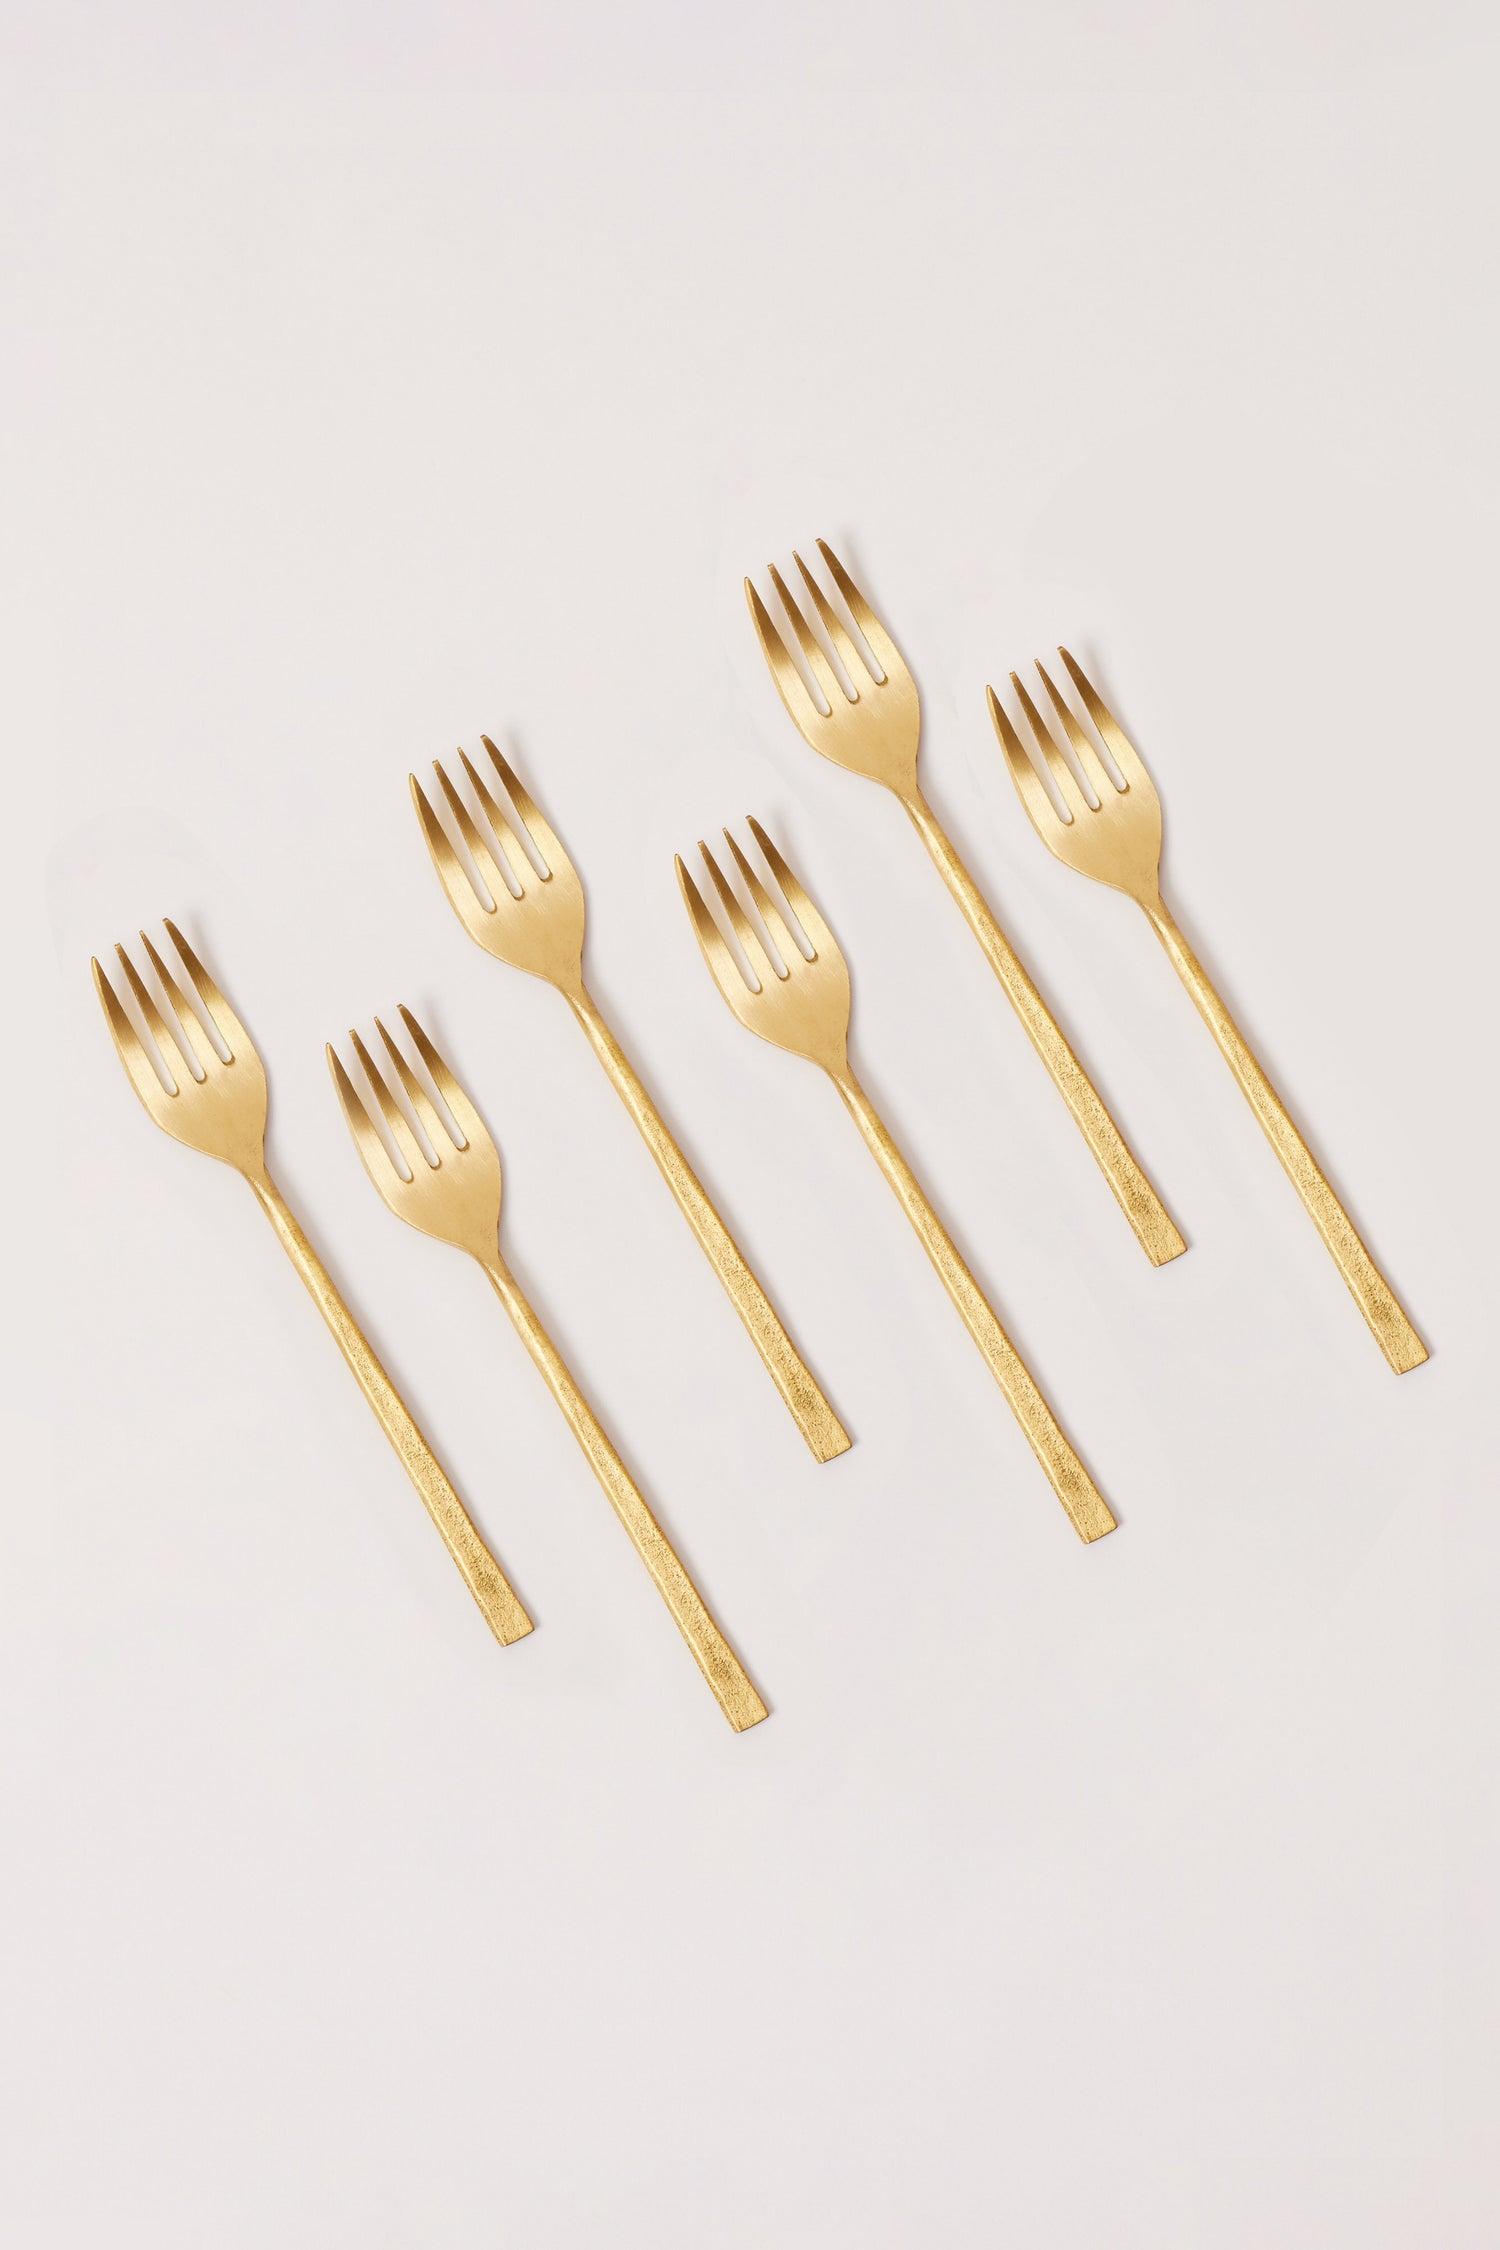 Wabi Dinner Forks Set, Brass - Fleck